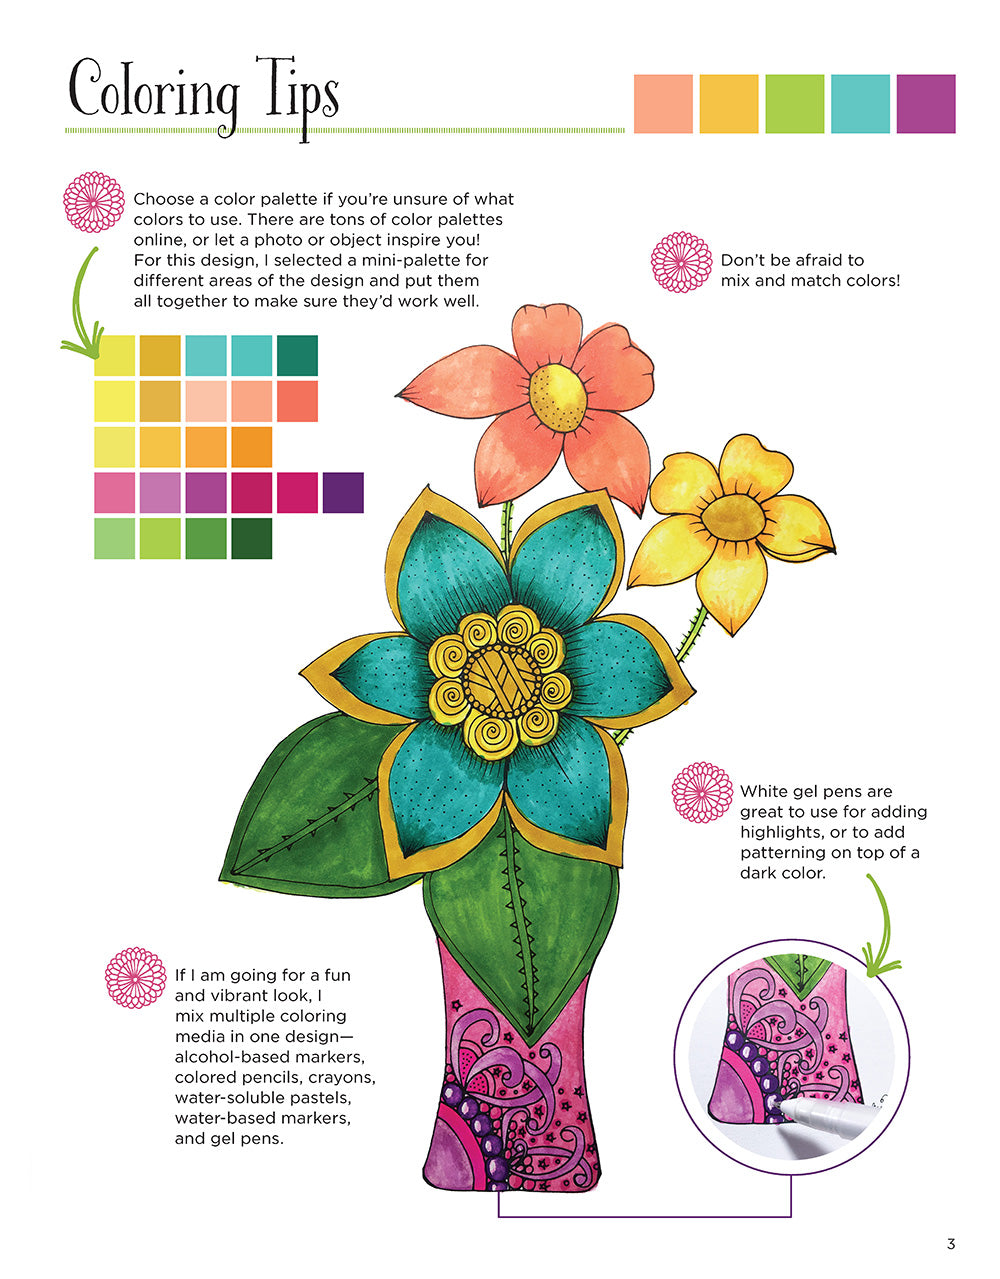 KC Doodle Art Flower Girls Coloring Book